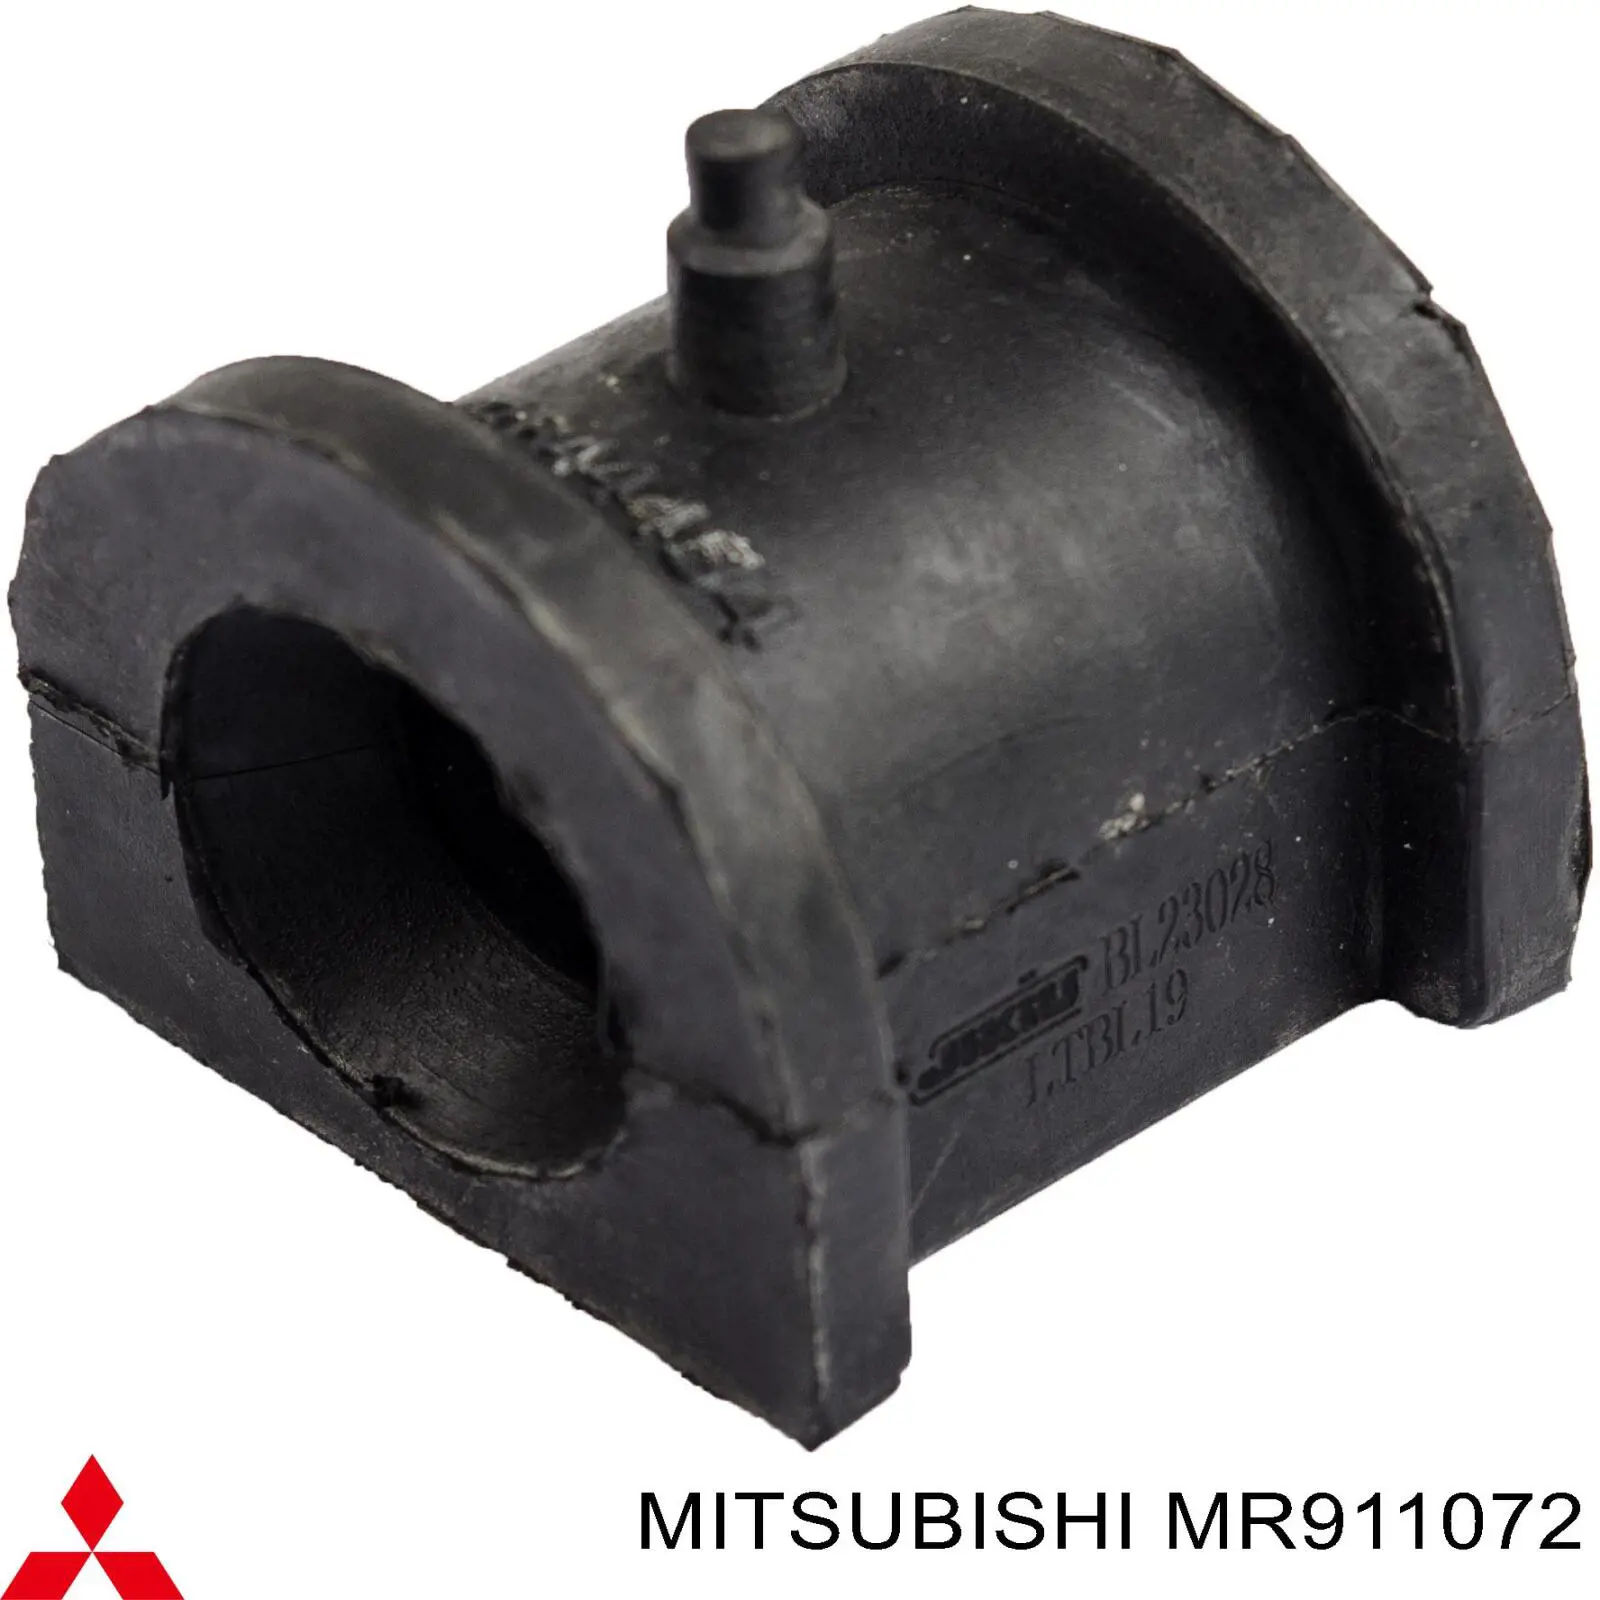 MR911072 Mitsubishi casquillo de barra estabilizadora delantera